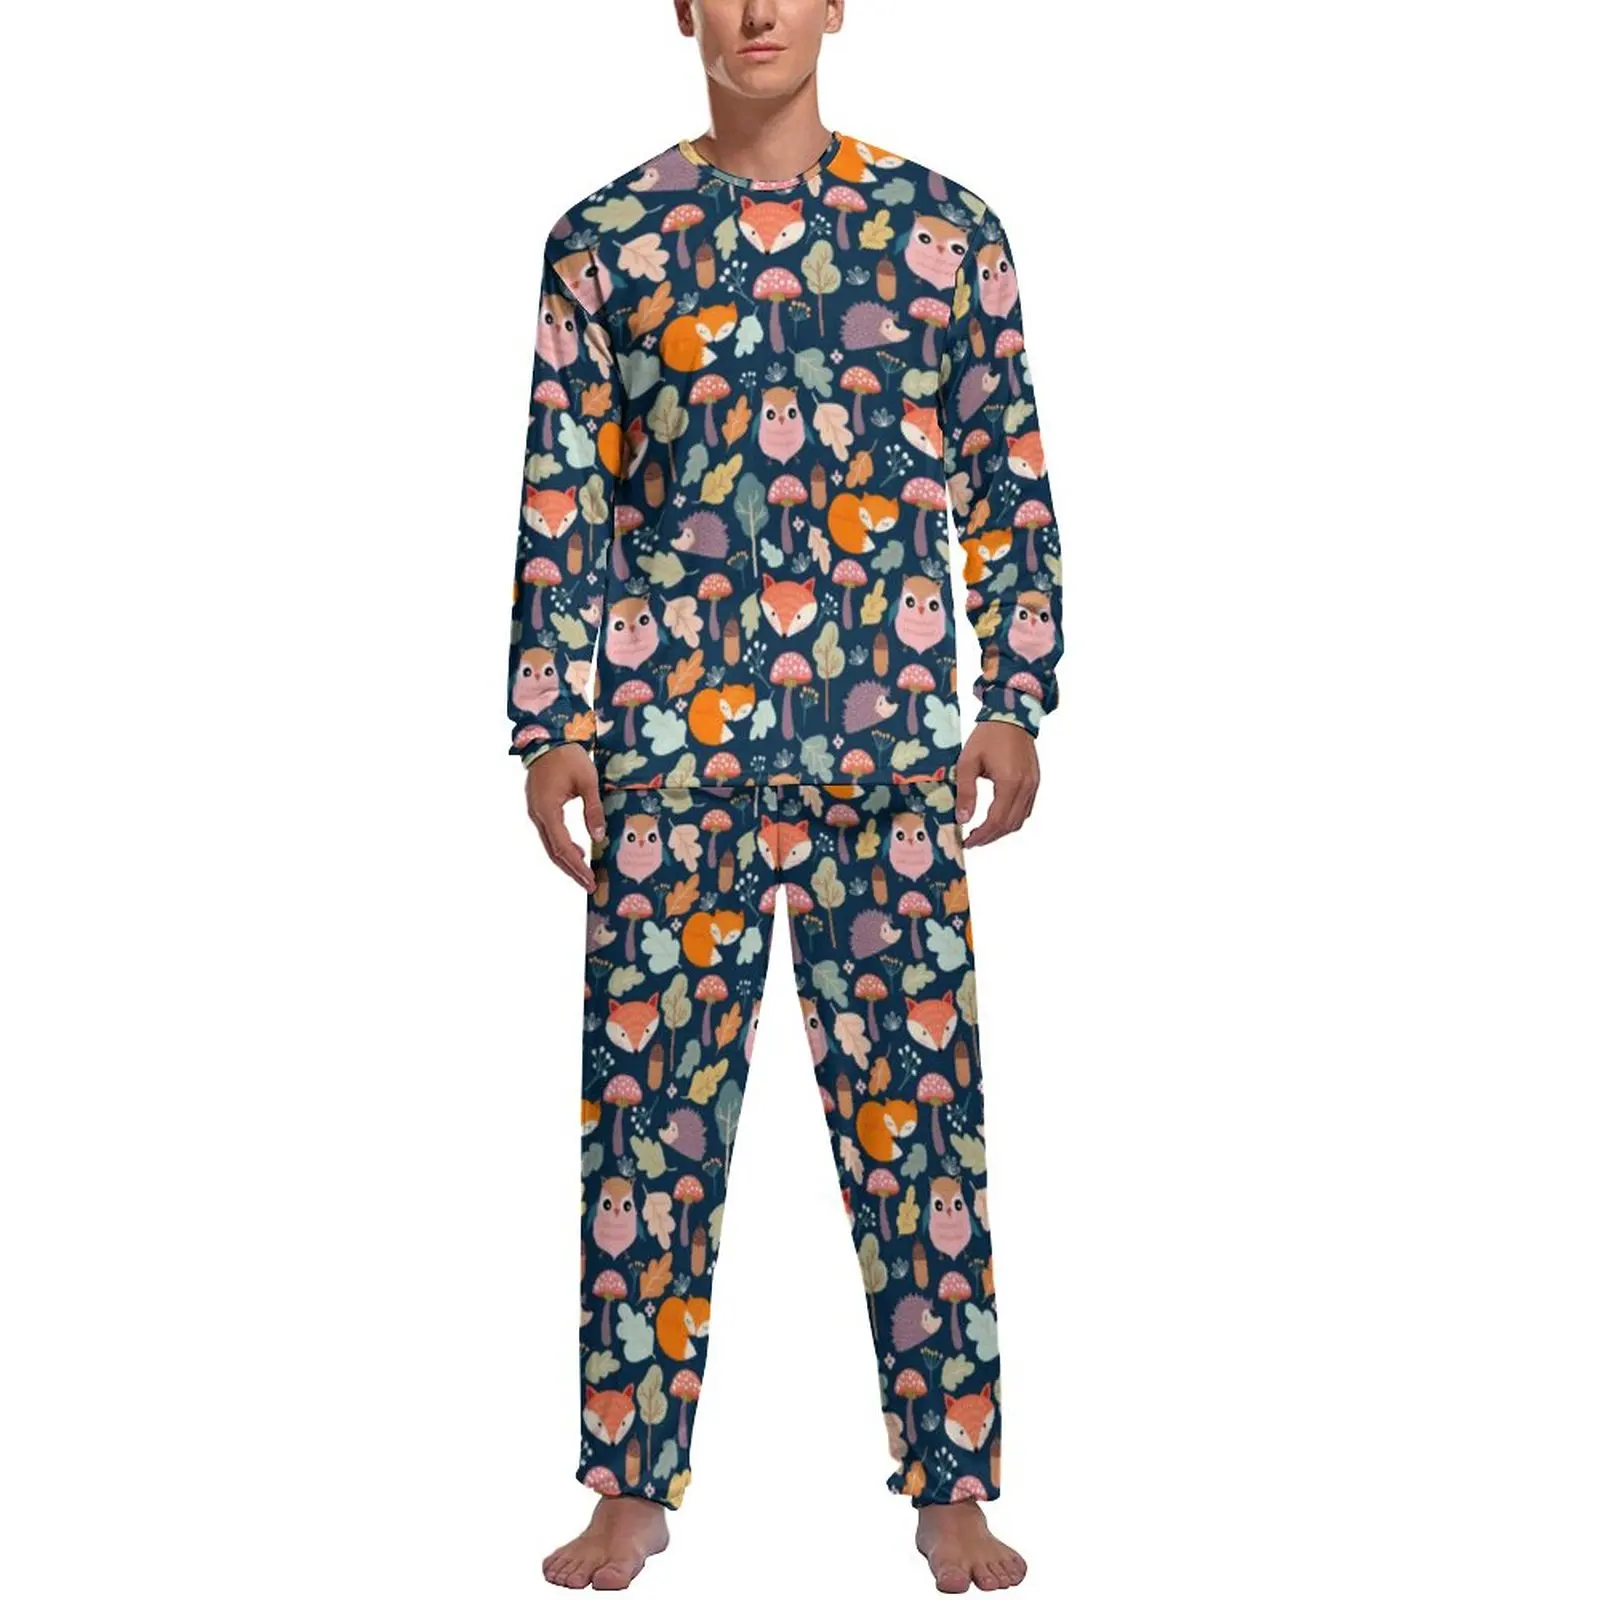 

Owl Fox Print Pajamas Cute Fall Forest Print Mens Long-Sleeve Warm Pajama Sets 2 Piece Casual Daily Graphic Sleepwear Gift Idea